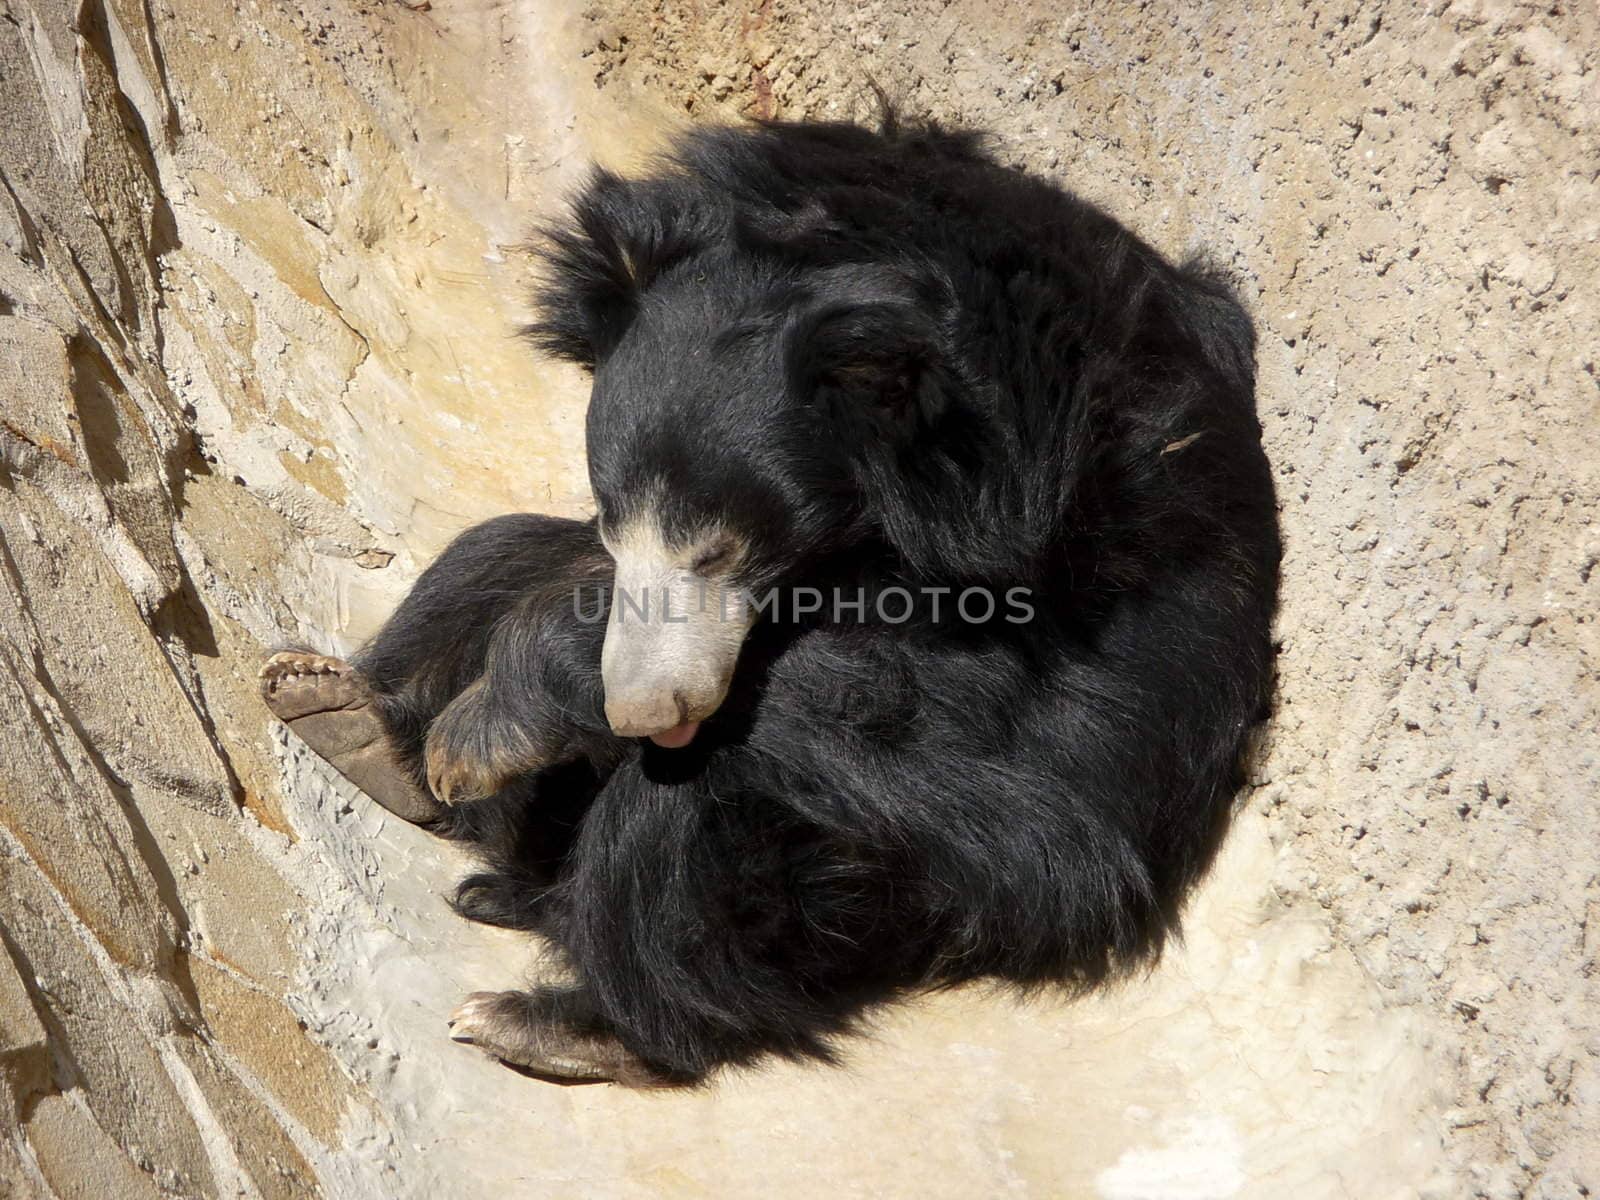 Cute black bear sleeps in a corner of stone wall